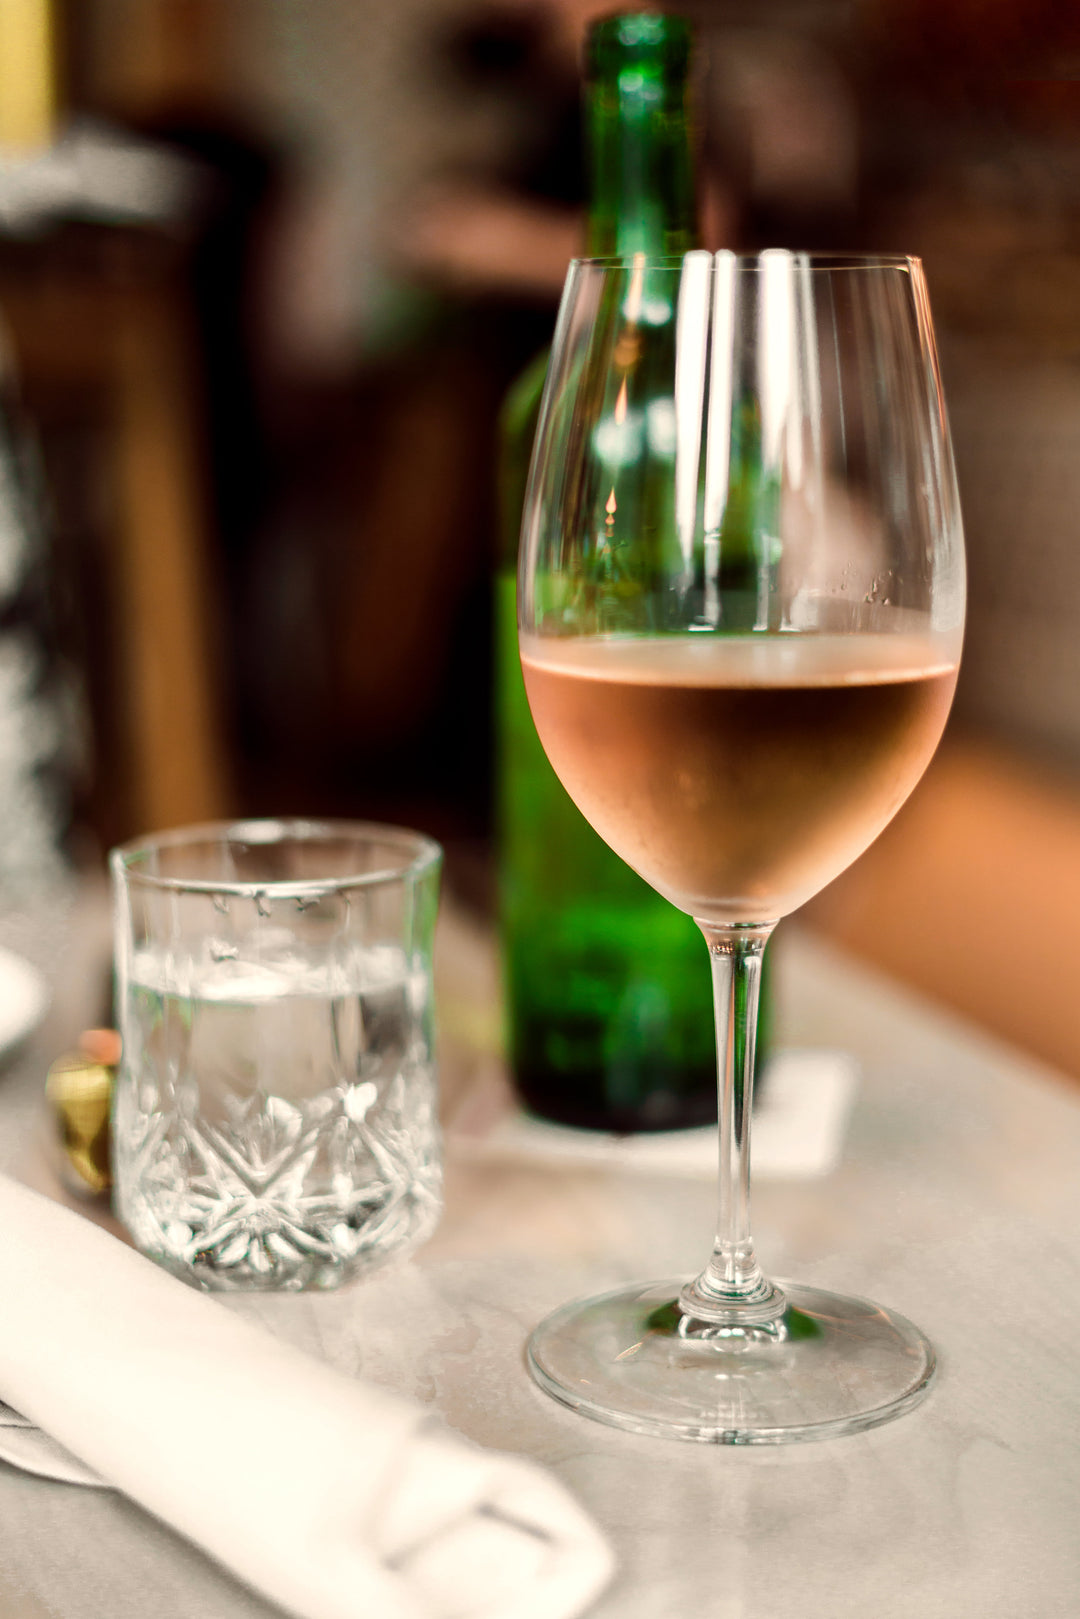 Boléro Vin Blanc  Vin blanc du Valais sans alcool – undrunk